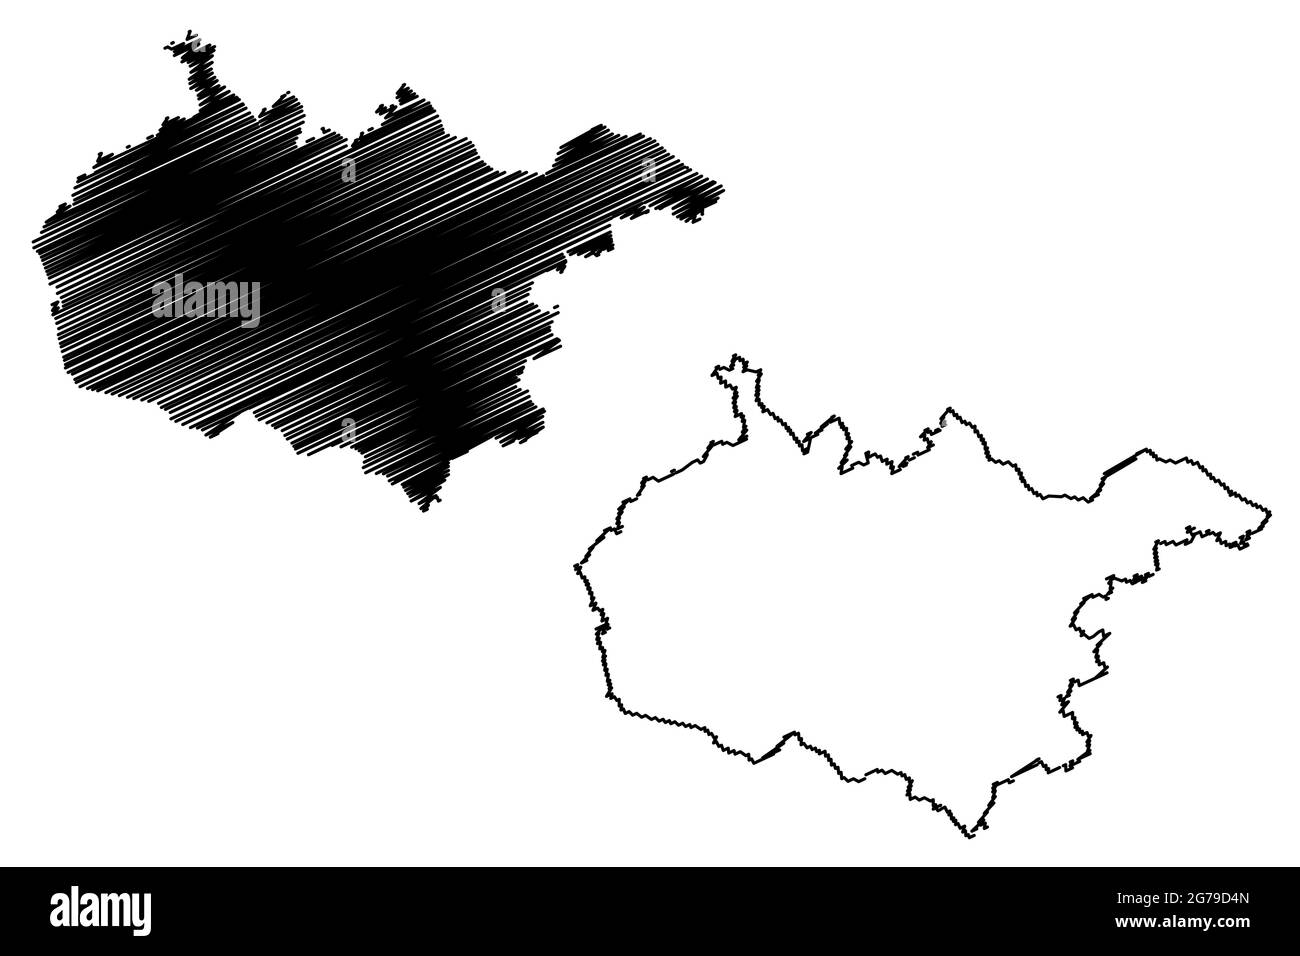 Landkreis Harburg (Bundesrepublik Deutschland, Landkreis, Bundesland Niedersachsen) Kartenvektordarstellung, Scribble-Skizze Harburg-Karte Stock Vektor